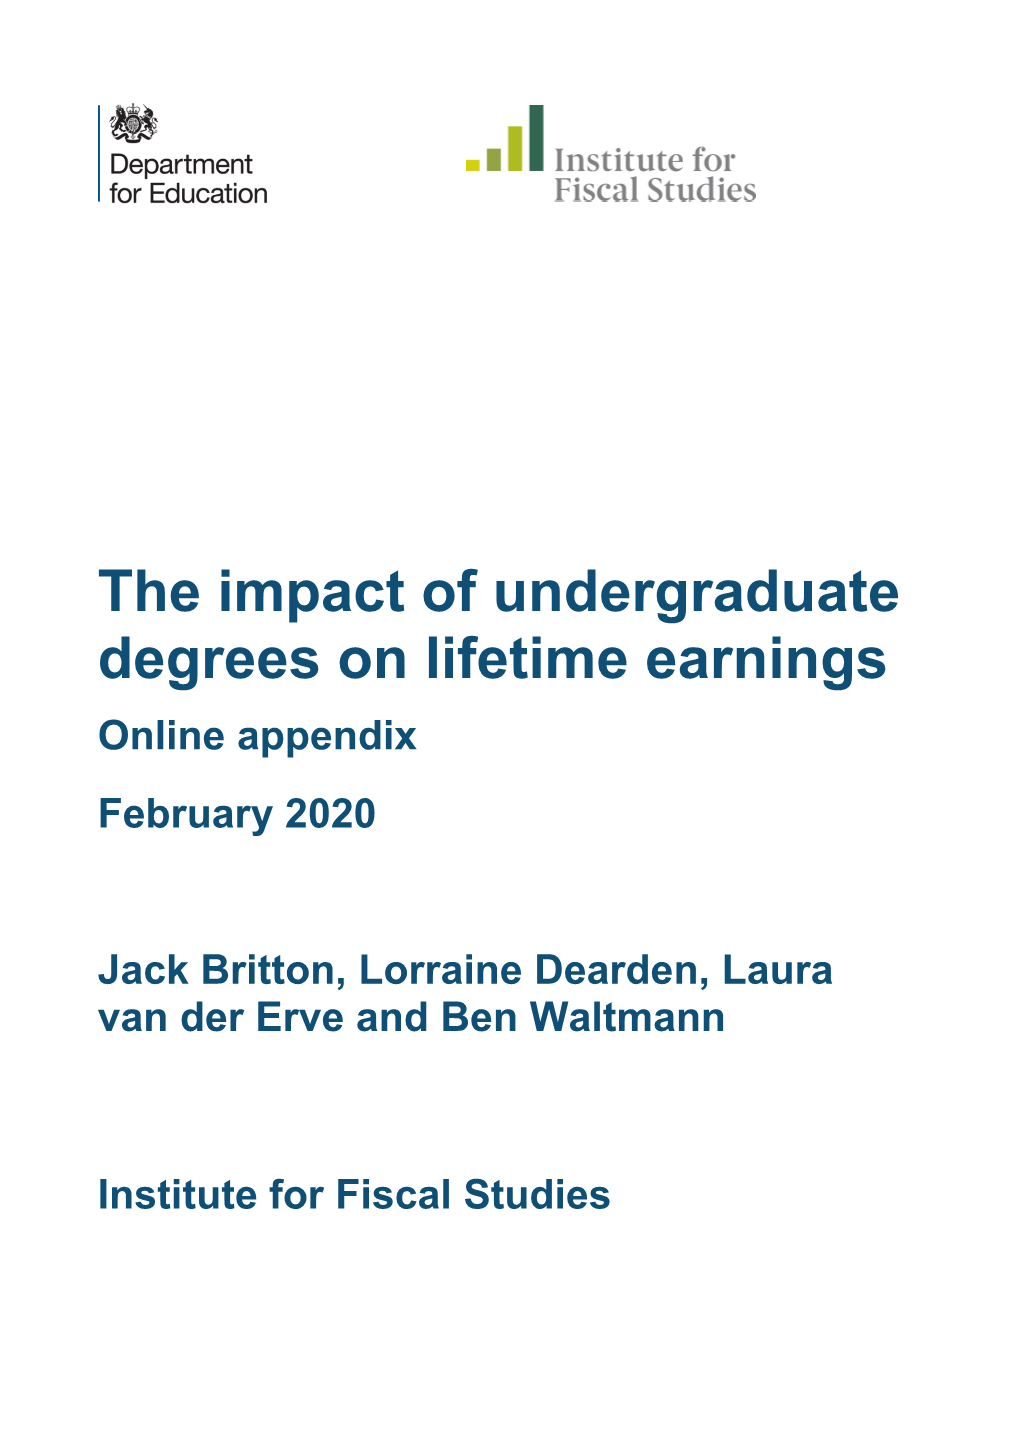 The Impact of Undergraduate Degrees on Lifetime Earnings Online Appendix February 2020